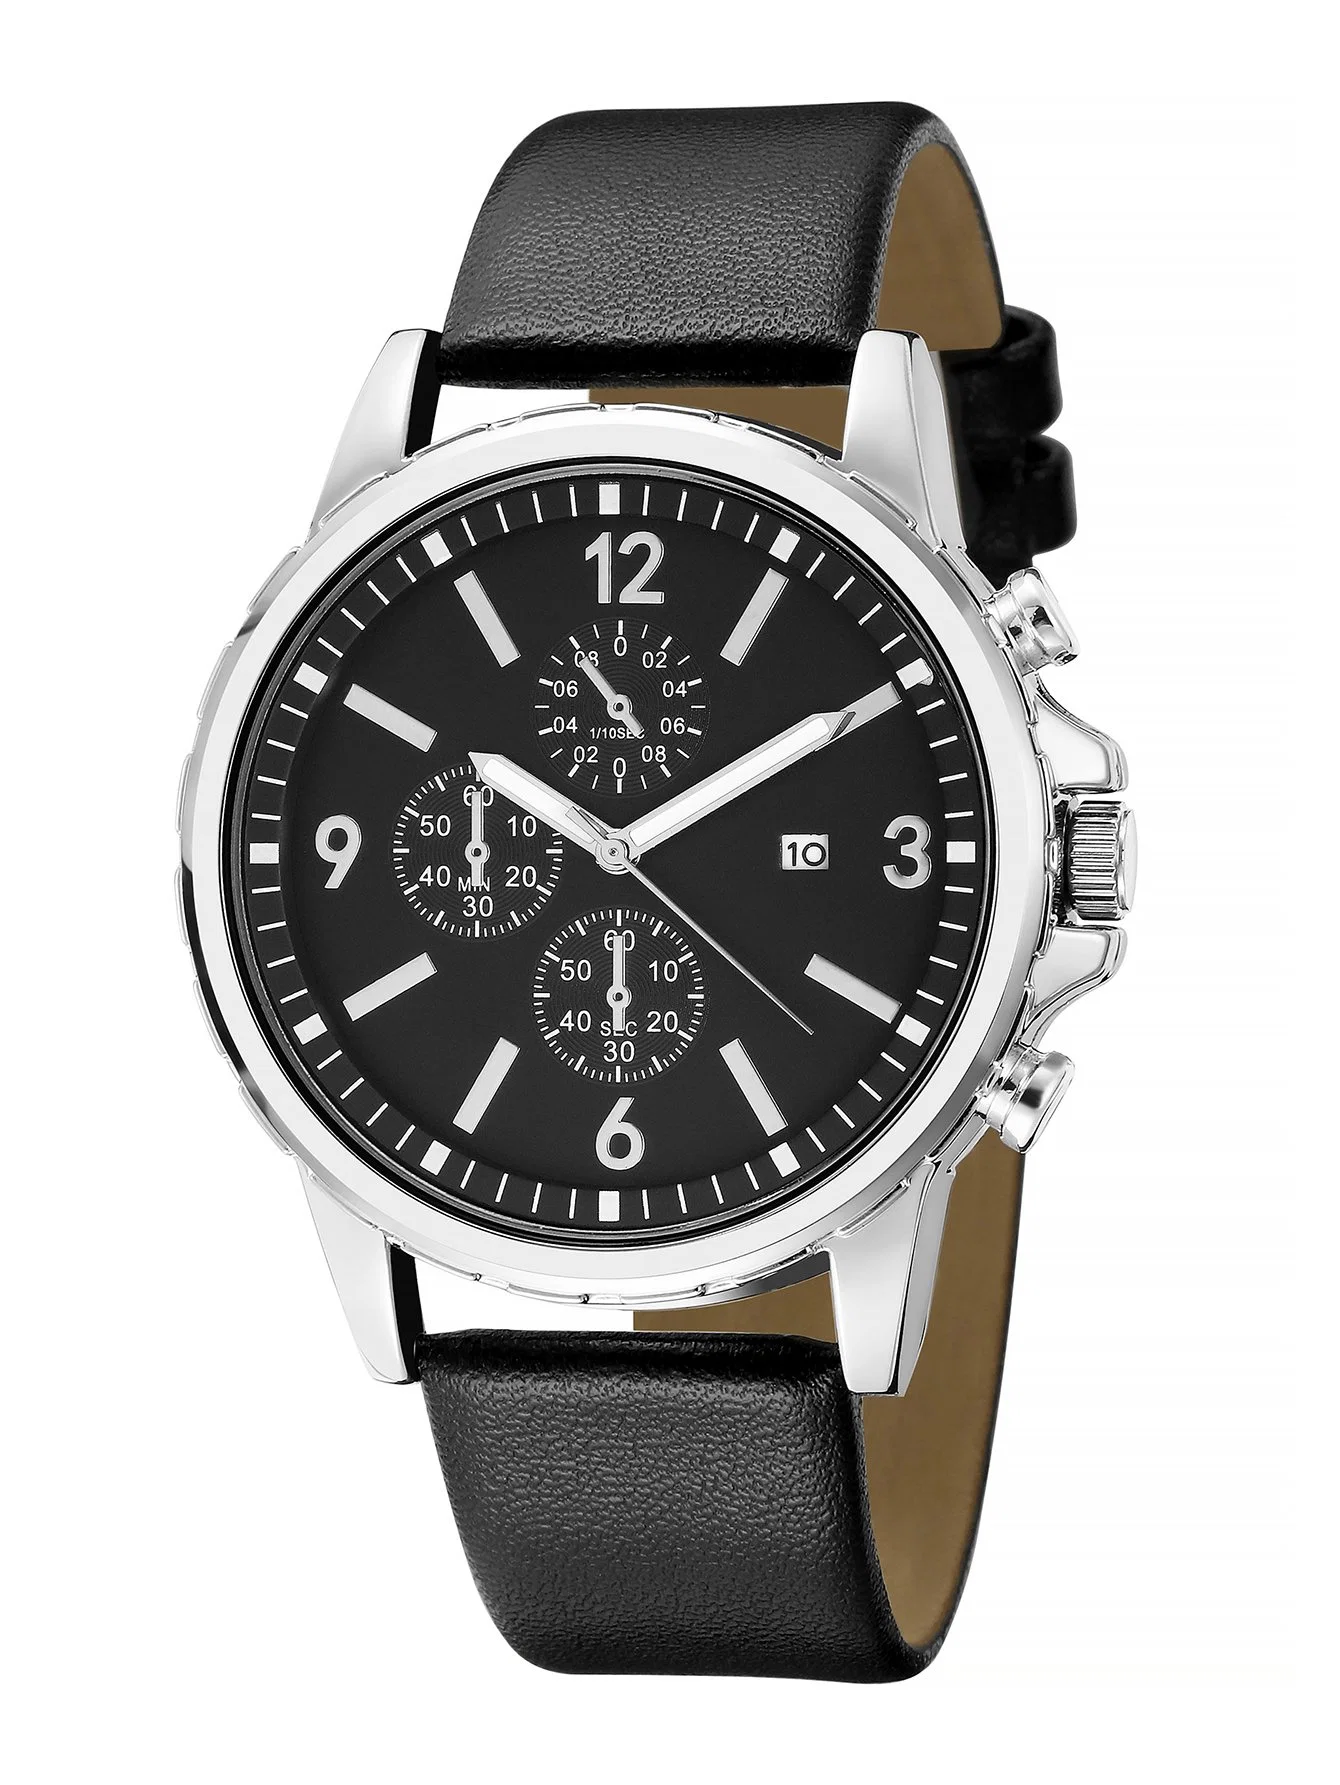 Wrist Watch OEM Customized Logo Sports Hot Sell Leather Strap Men Watch Cheap Price Waterproof Quartz Wrist Watch OEM Customized